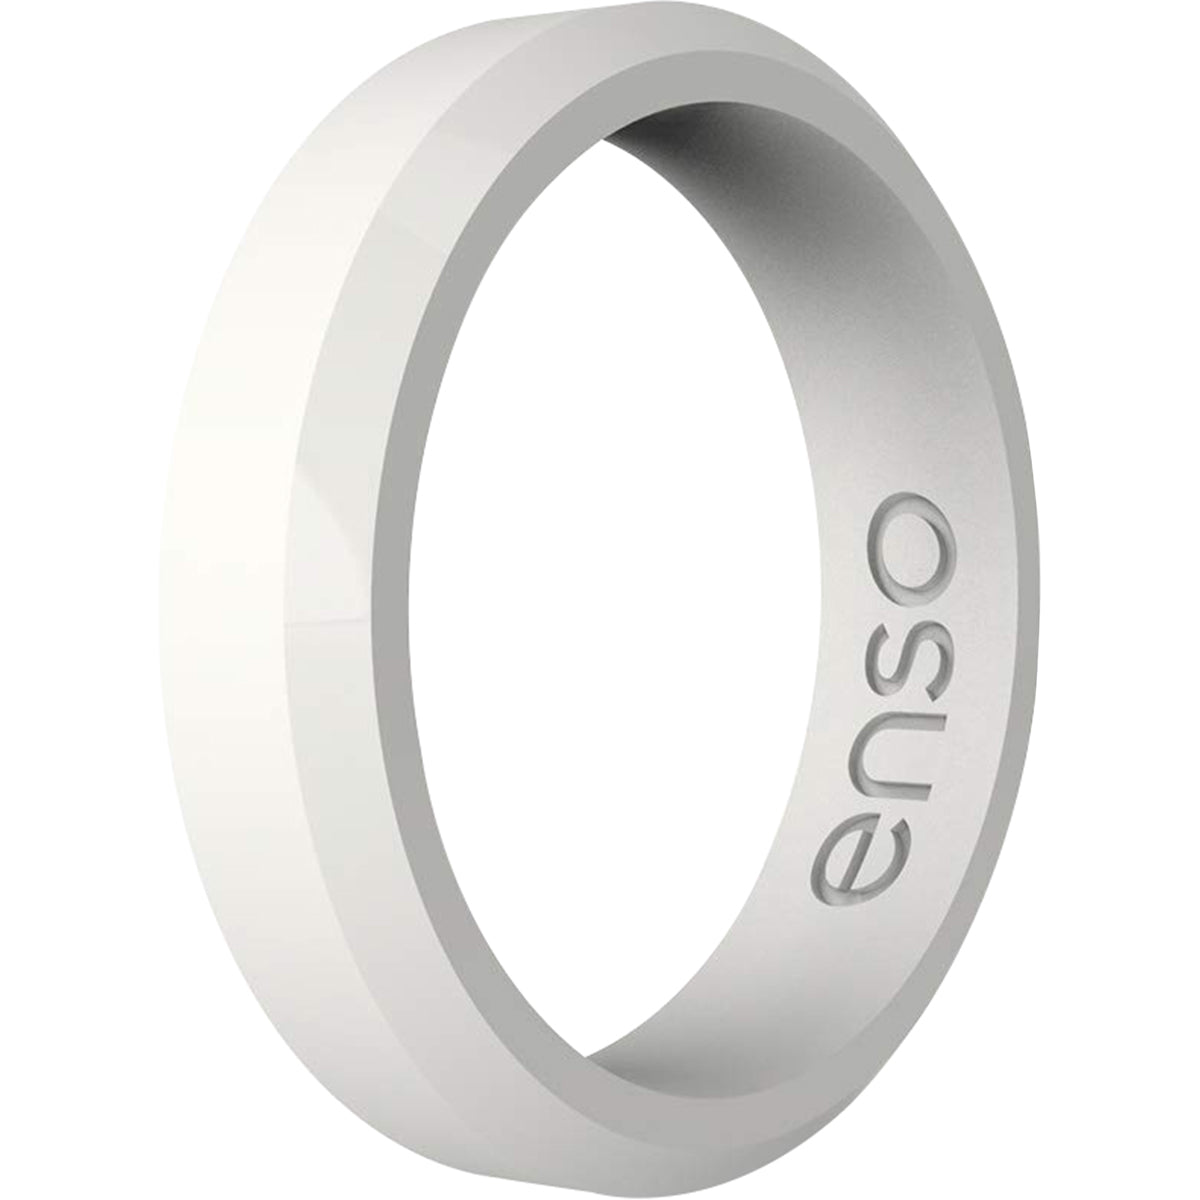 Enso Rings Thin Bevel Series Silicone Ring - White Enso Rings